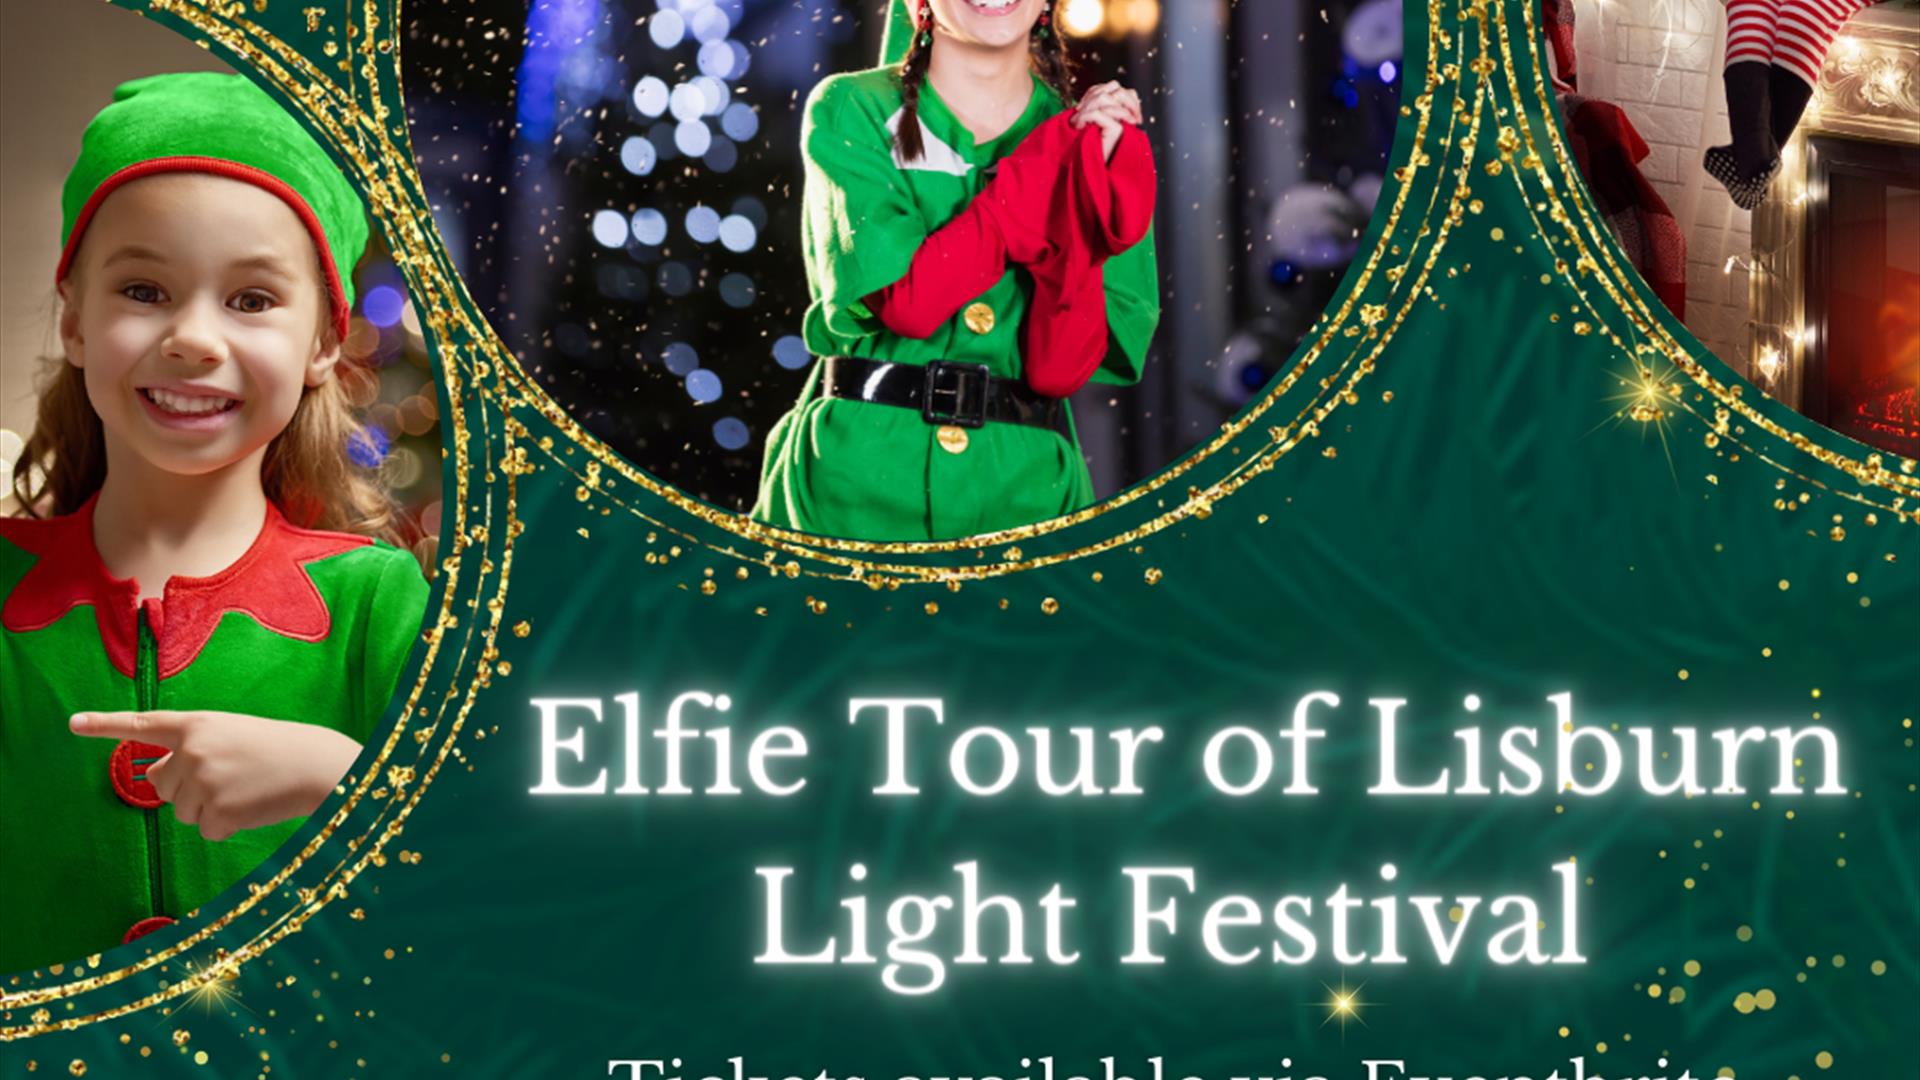 Image is children dressed as elves